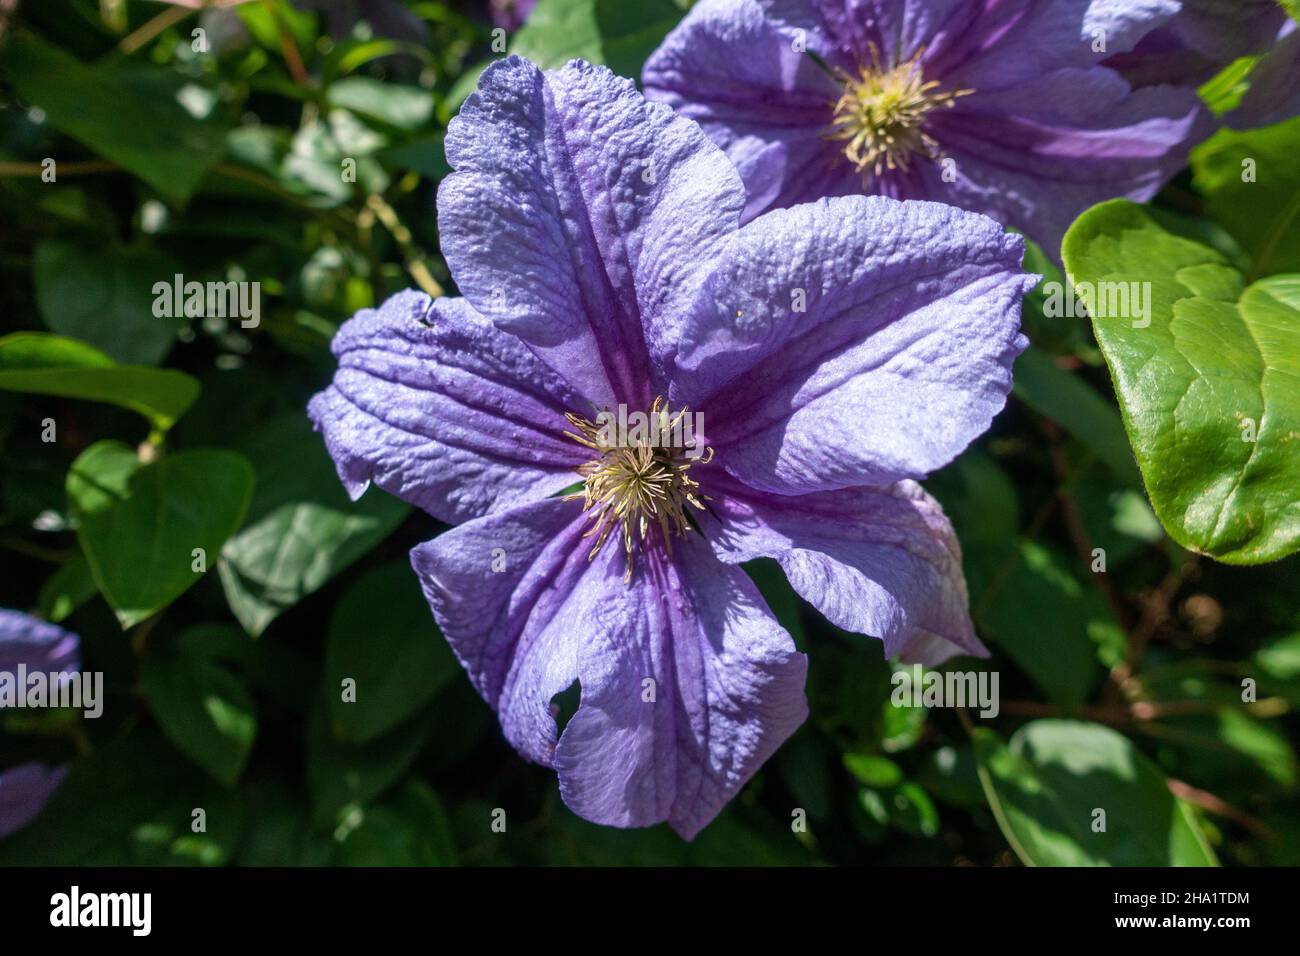 Italian leather flower, purple clematis Stock Photo